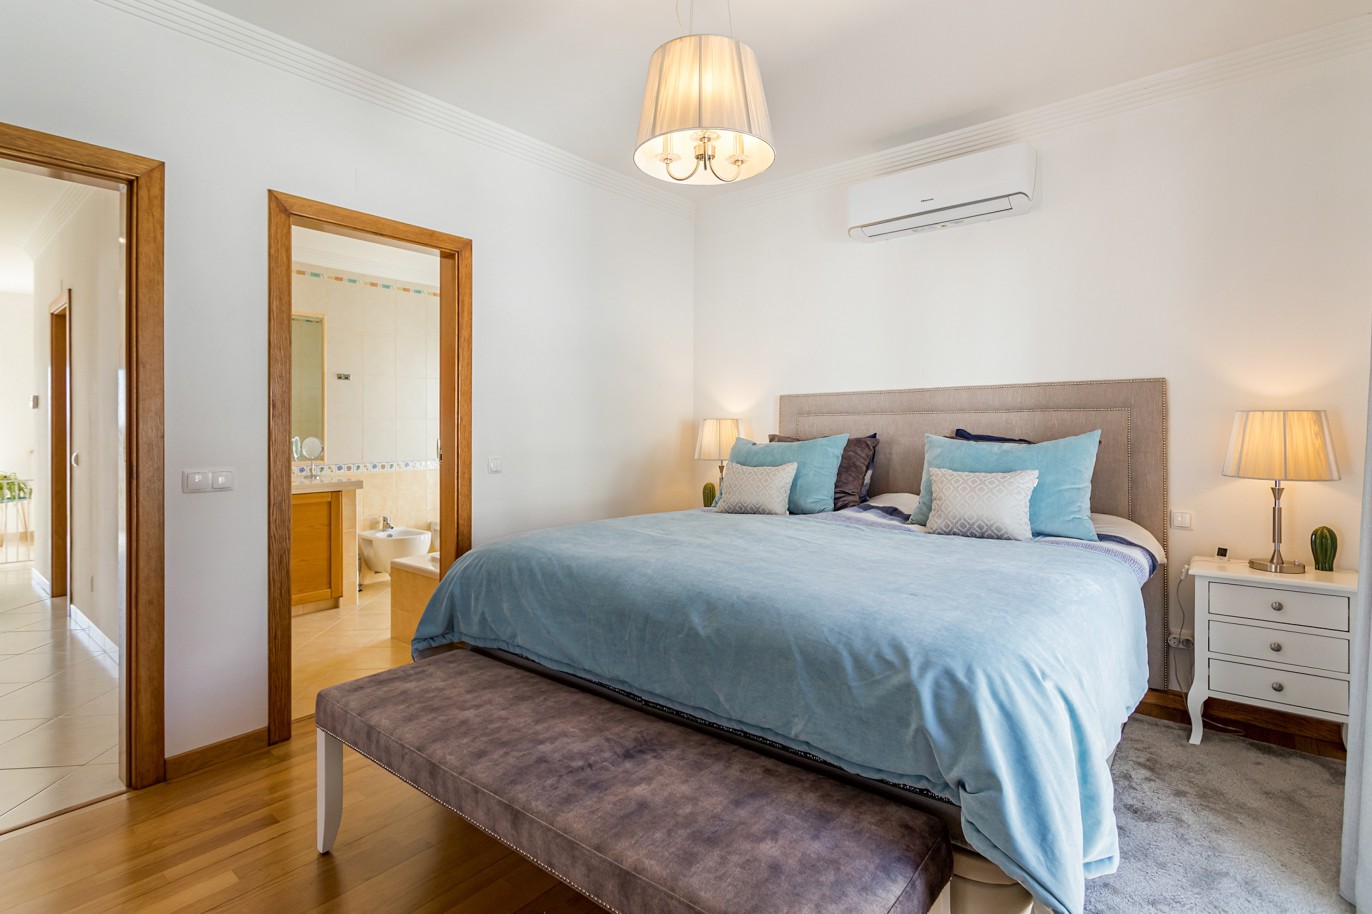 4 bedroom detached villa with pool for sale in Albufeira, Algarve_214355